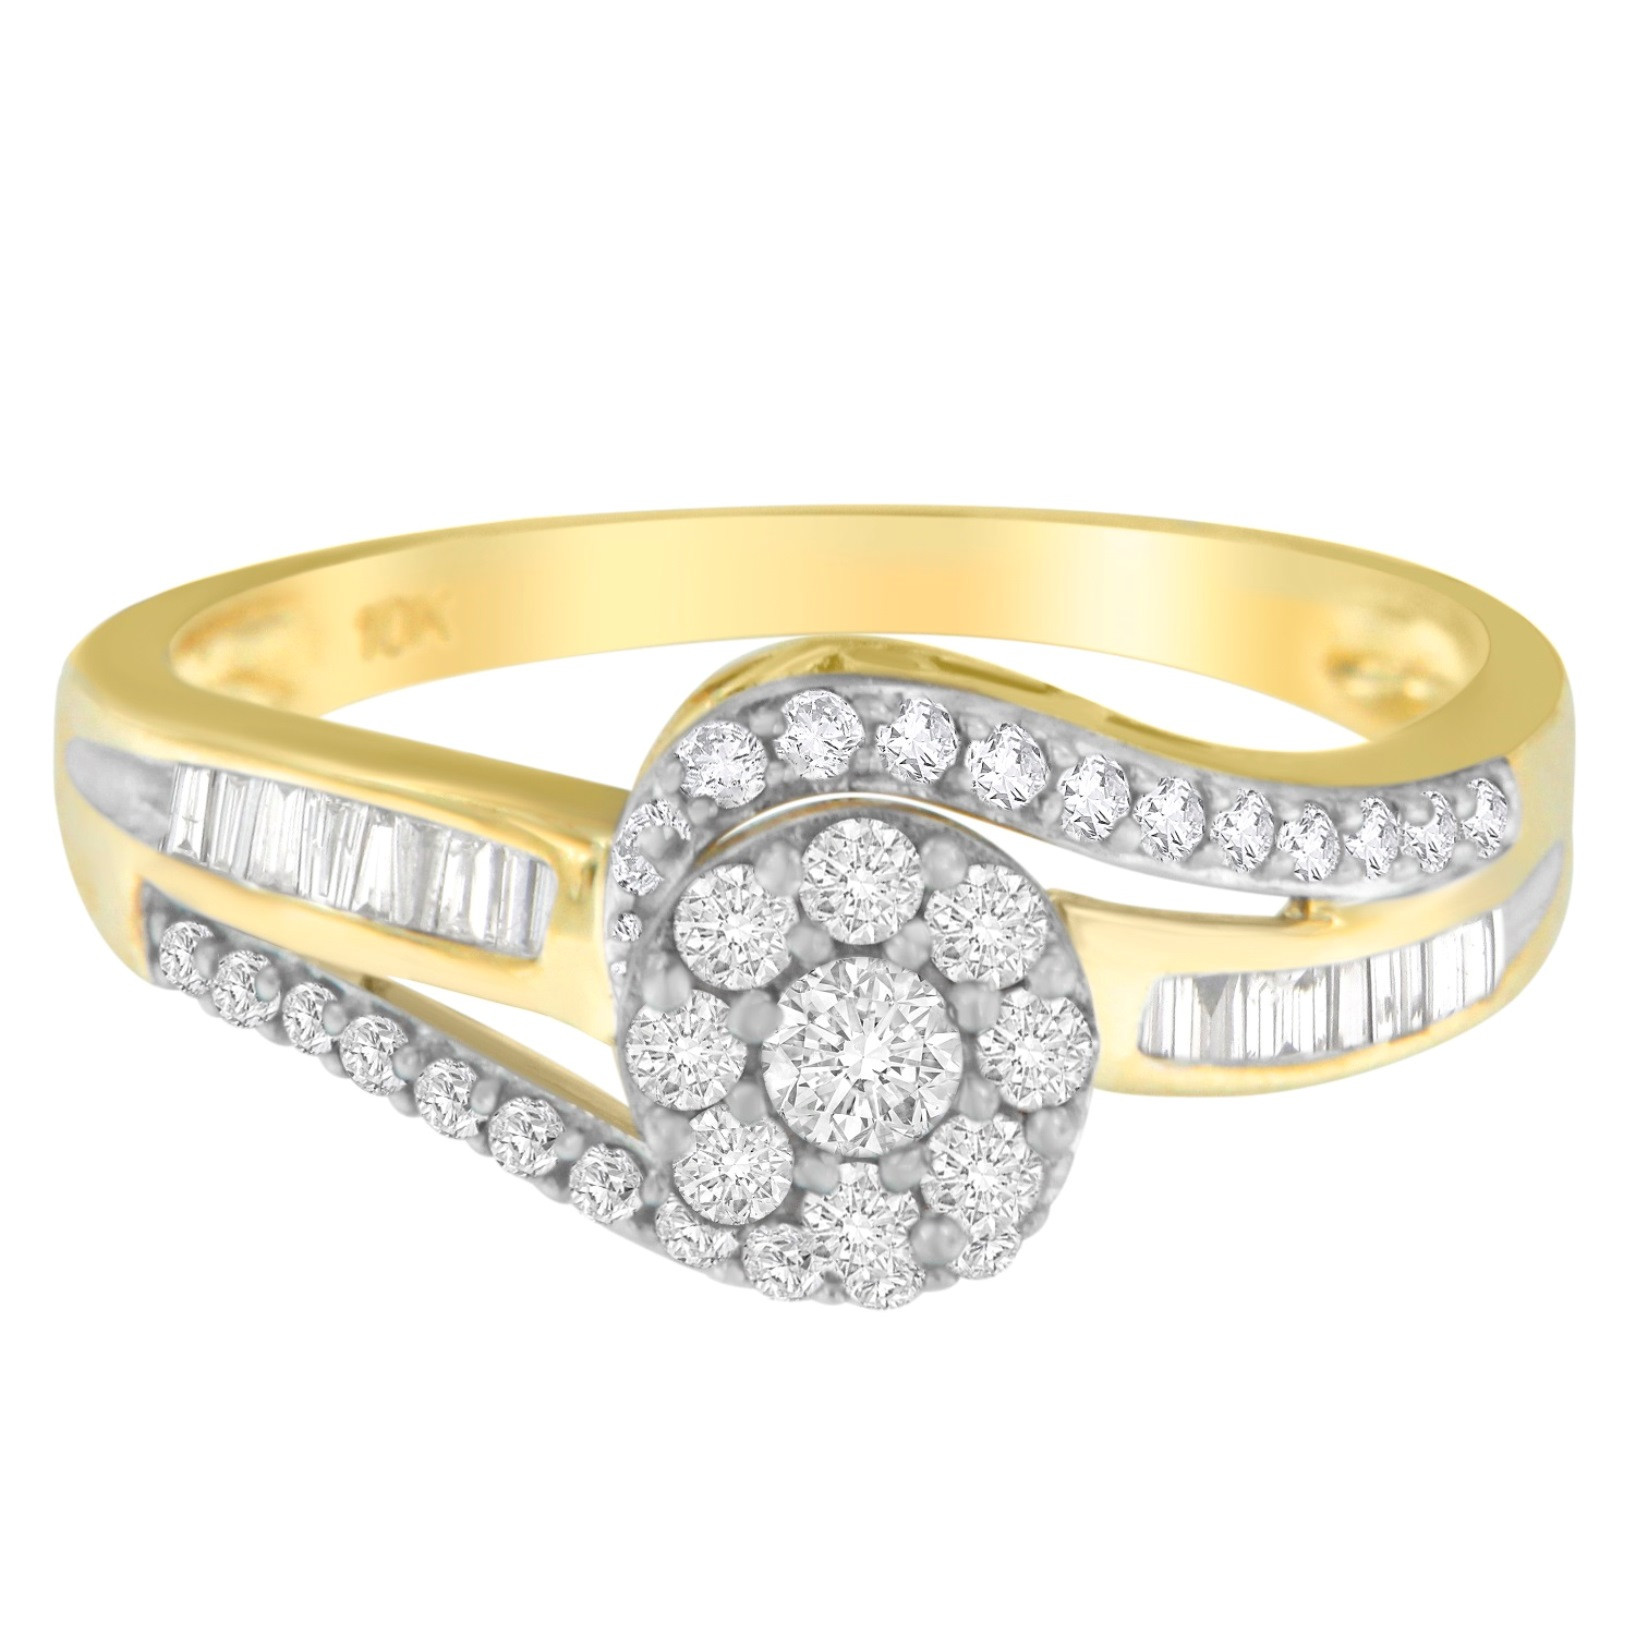 Kmart Wedding Rings
 Gold Baguette Engagement Ring